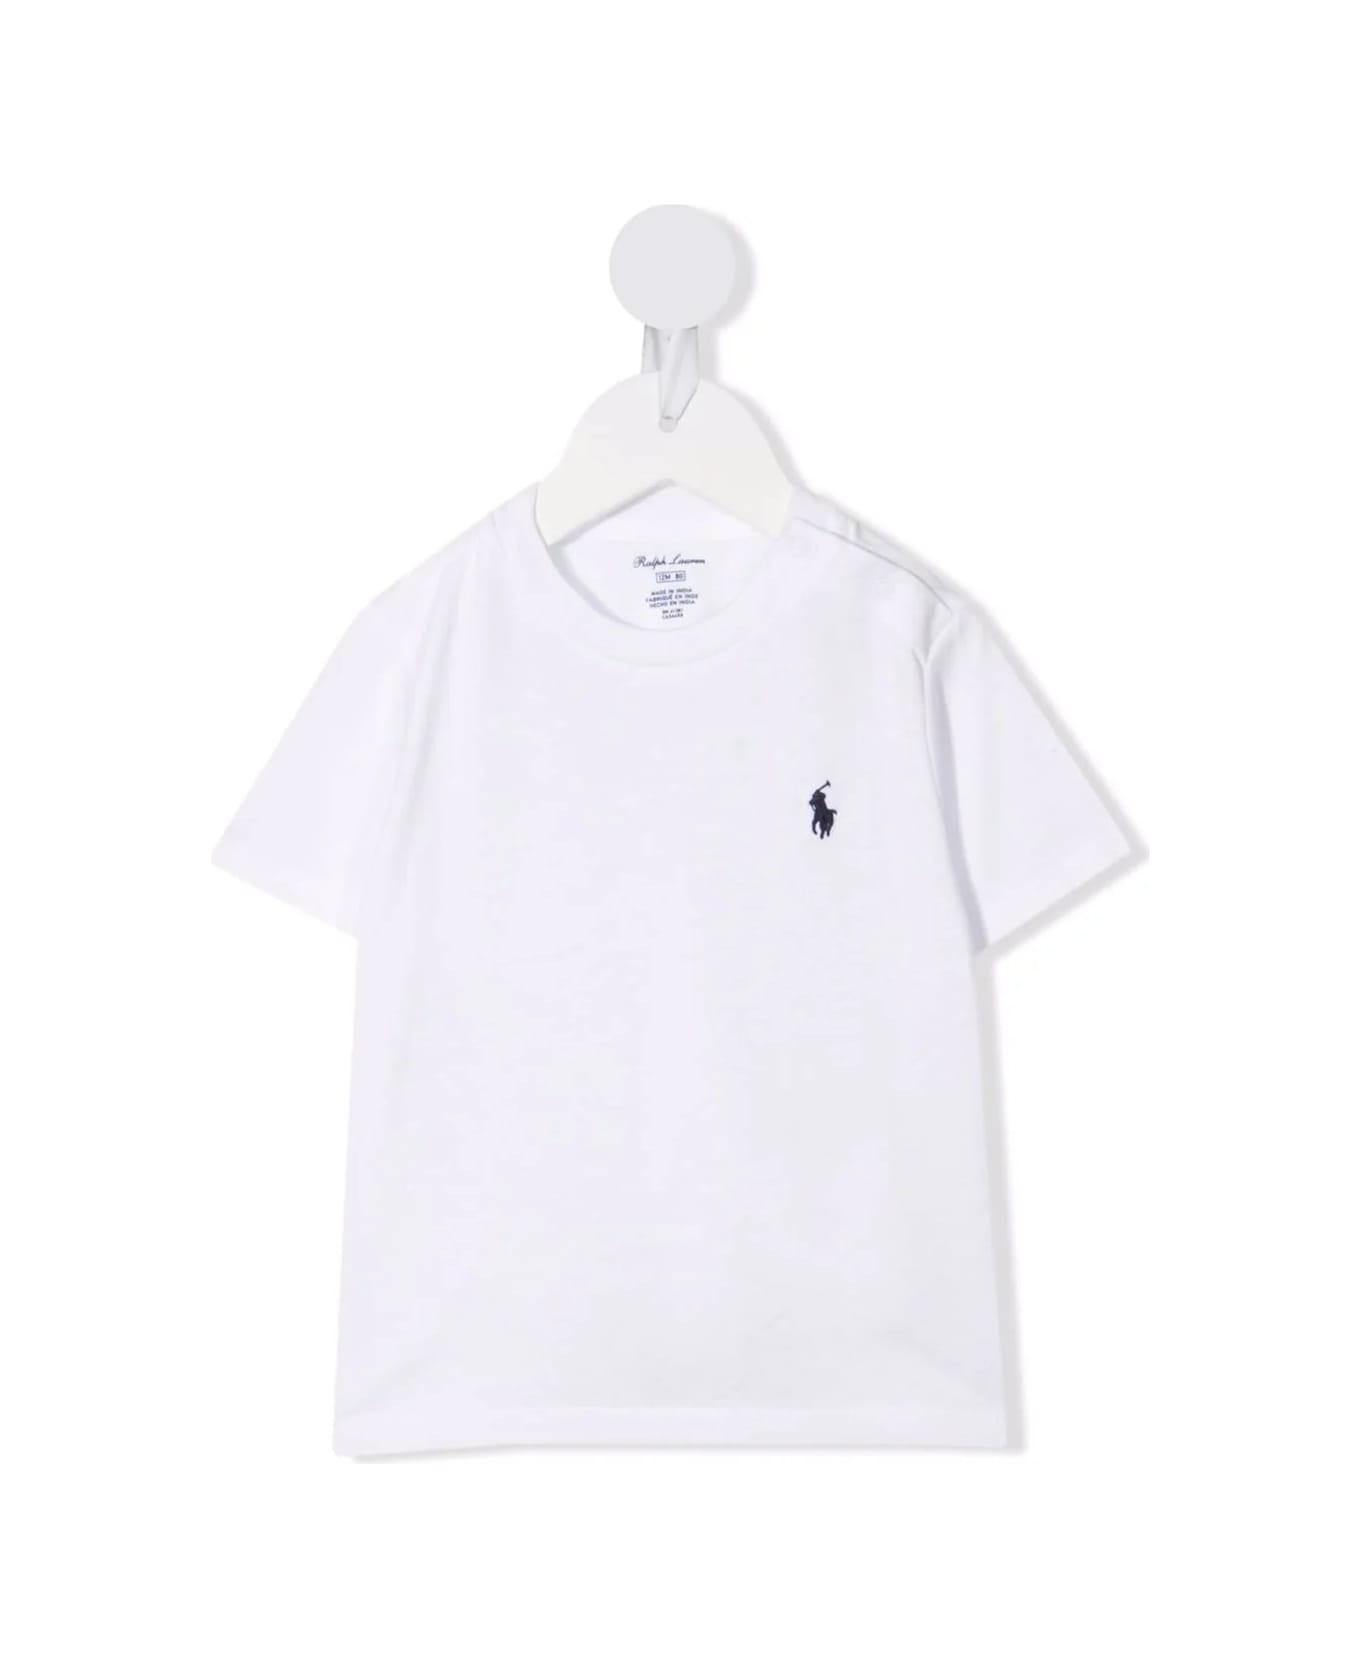 Ralph Lauren Baby White T-shirt With Navy Blue Pony - Bianco